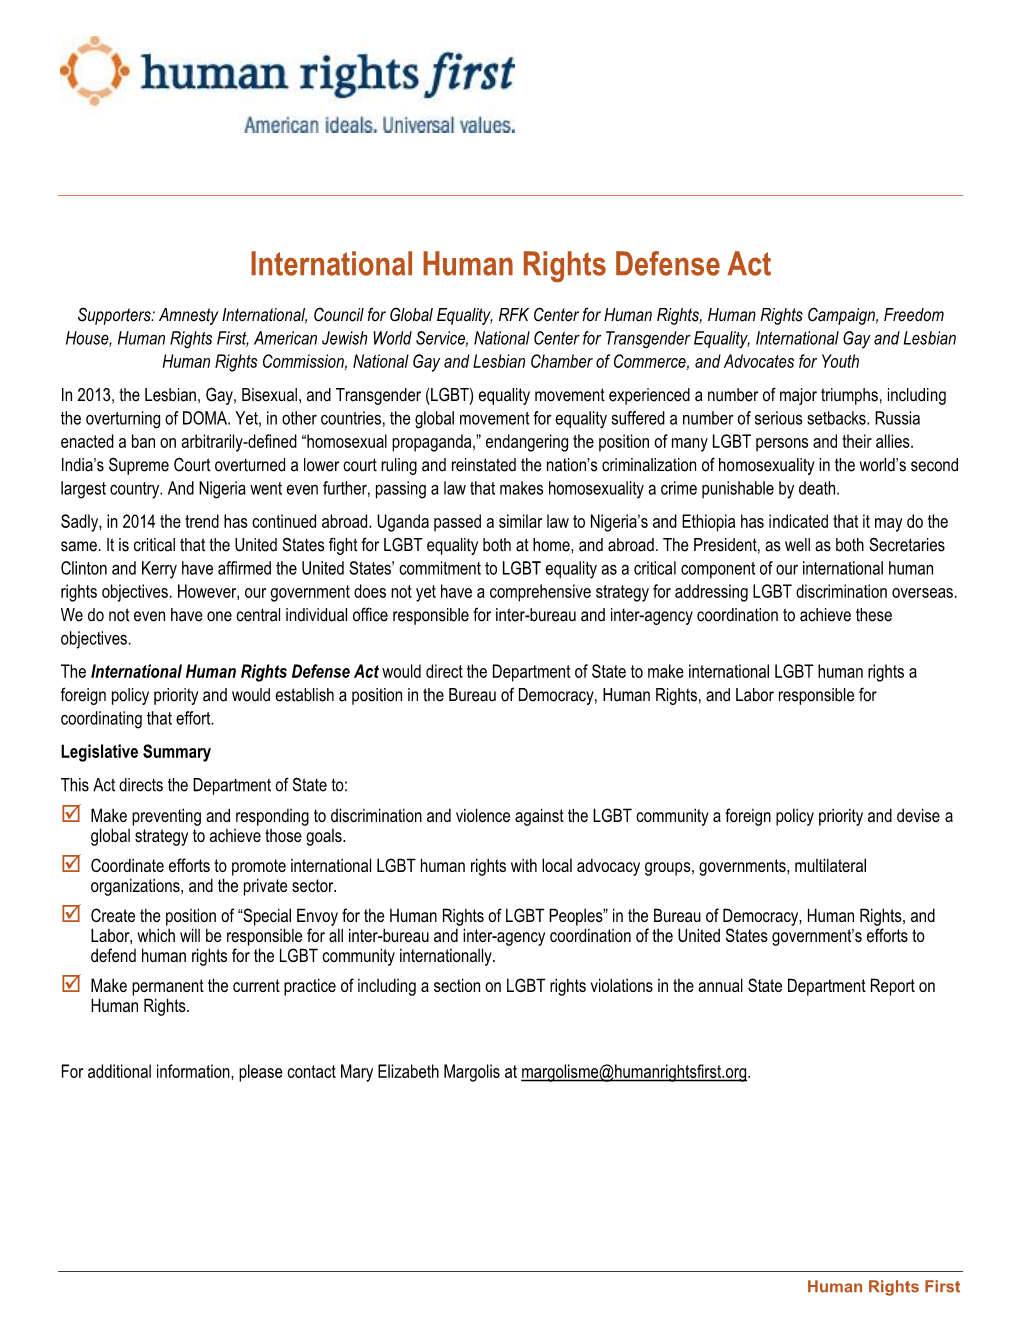 The International Human Rights Defense